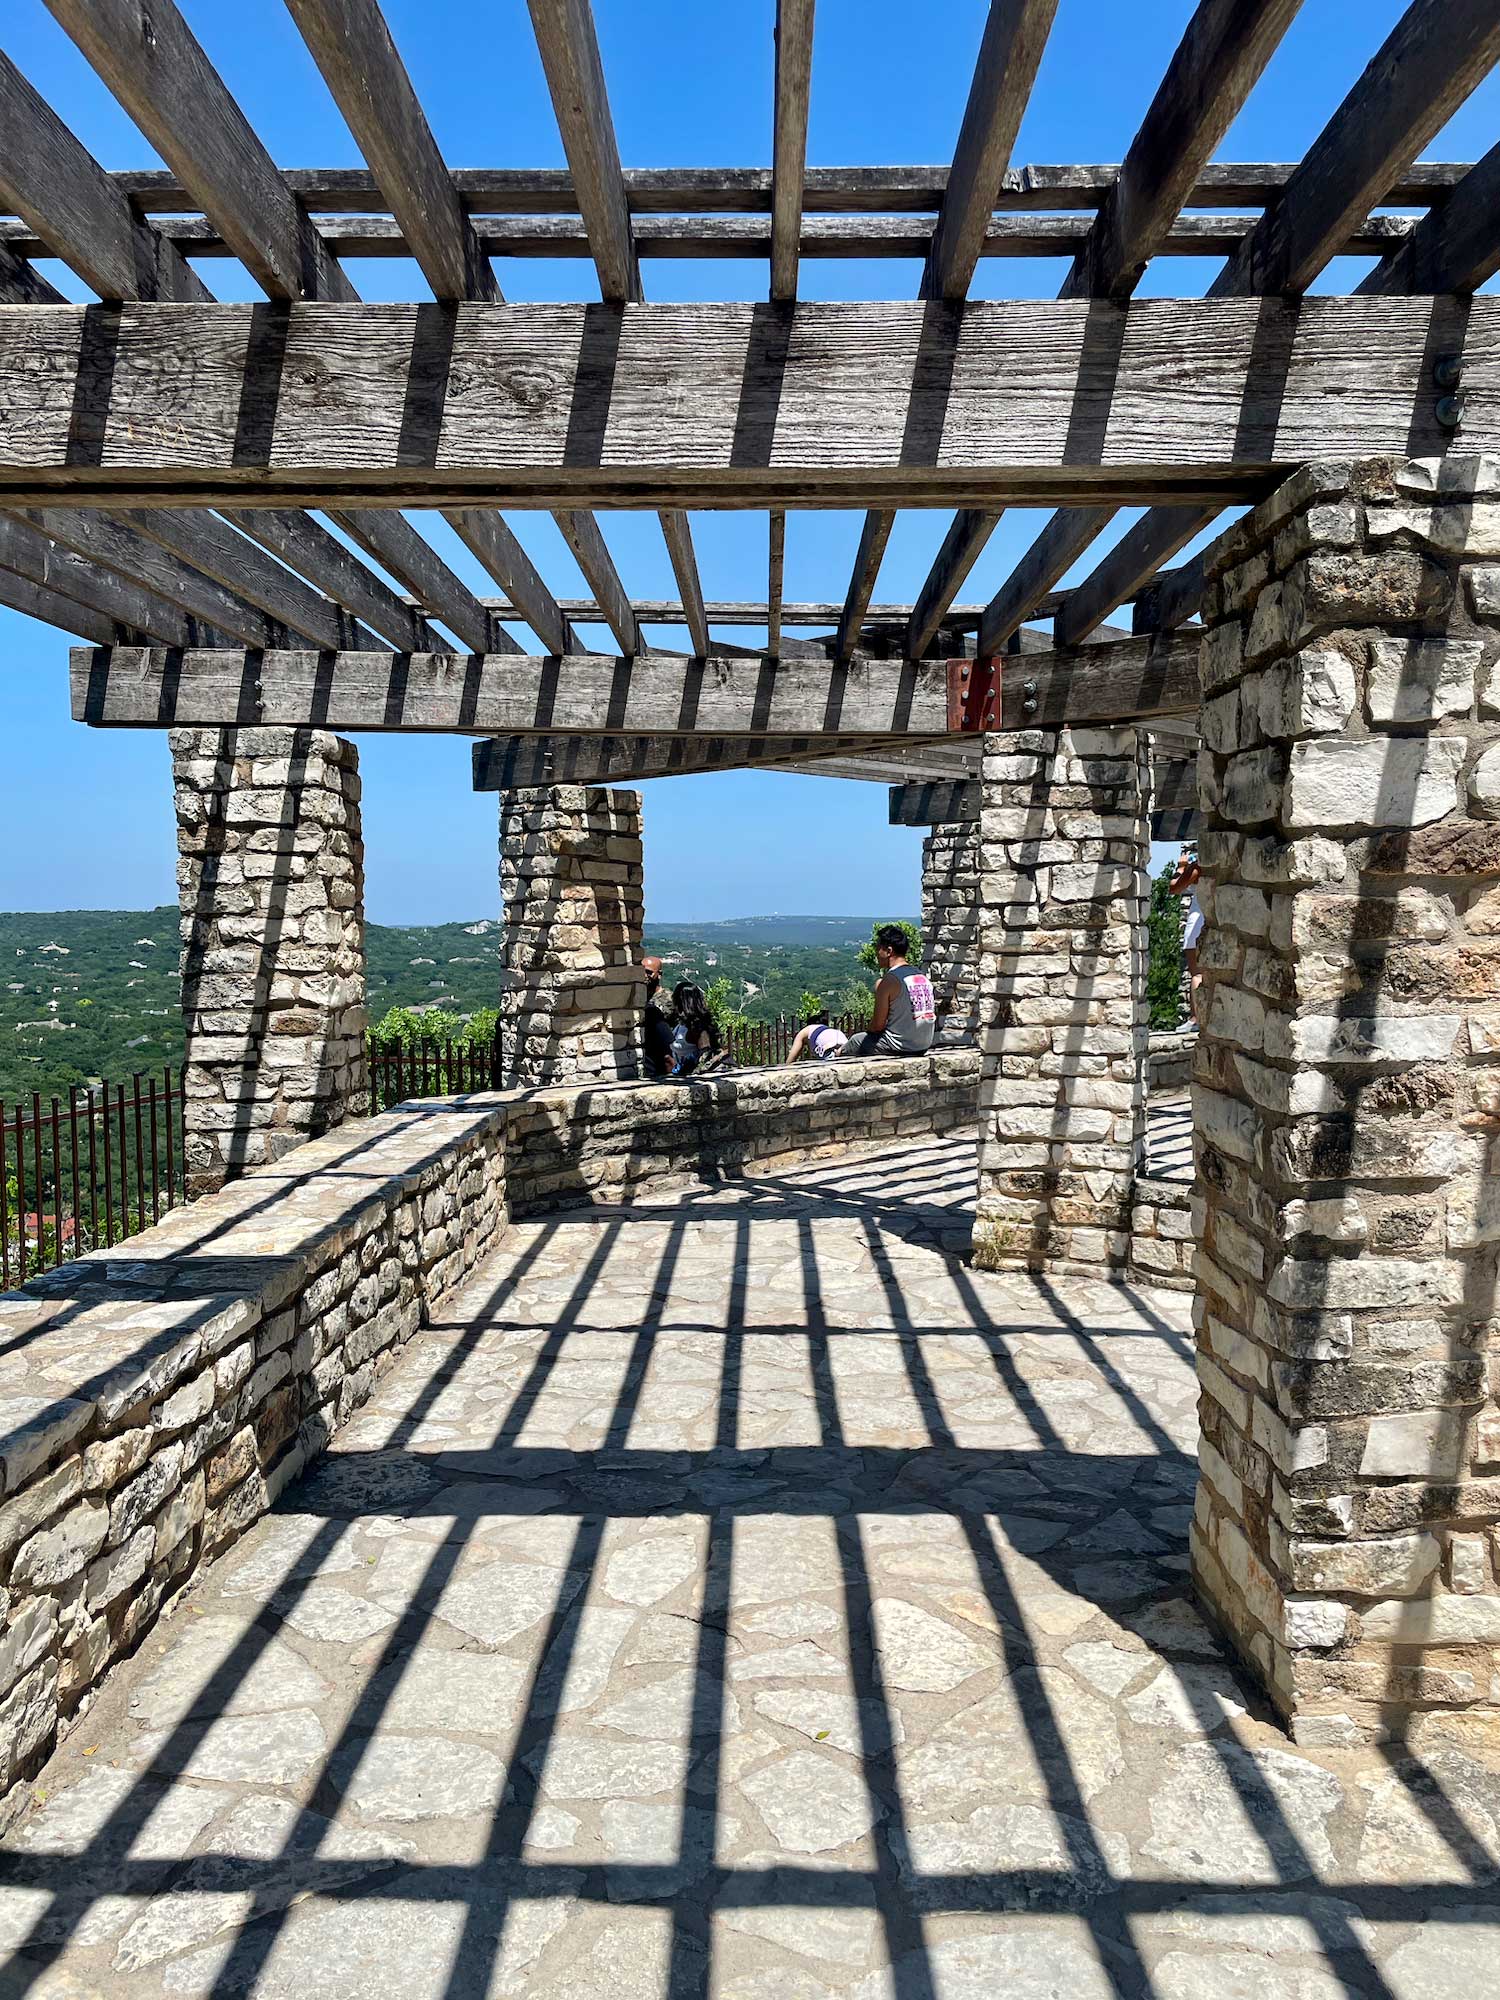 Mount Bonnell – Austin's Highest Point & Popular Tourist Attraction